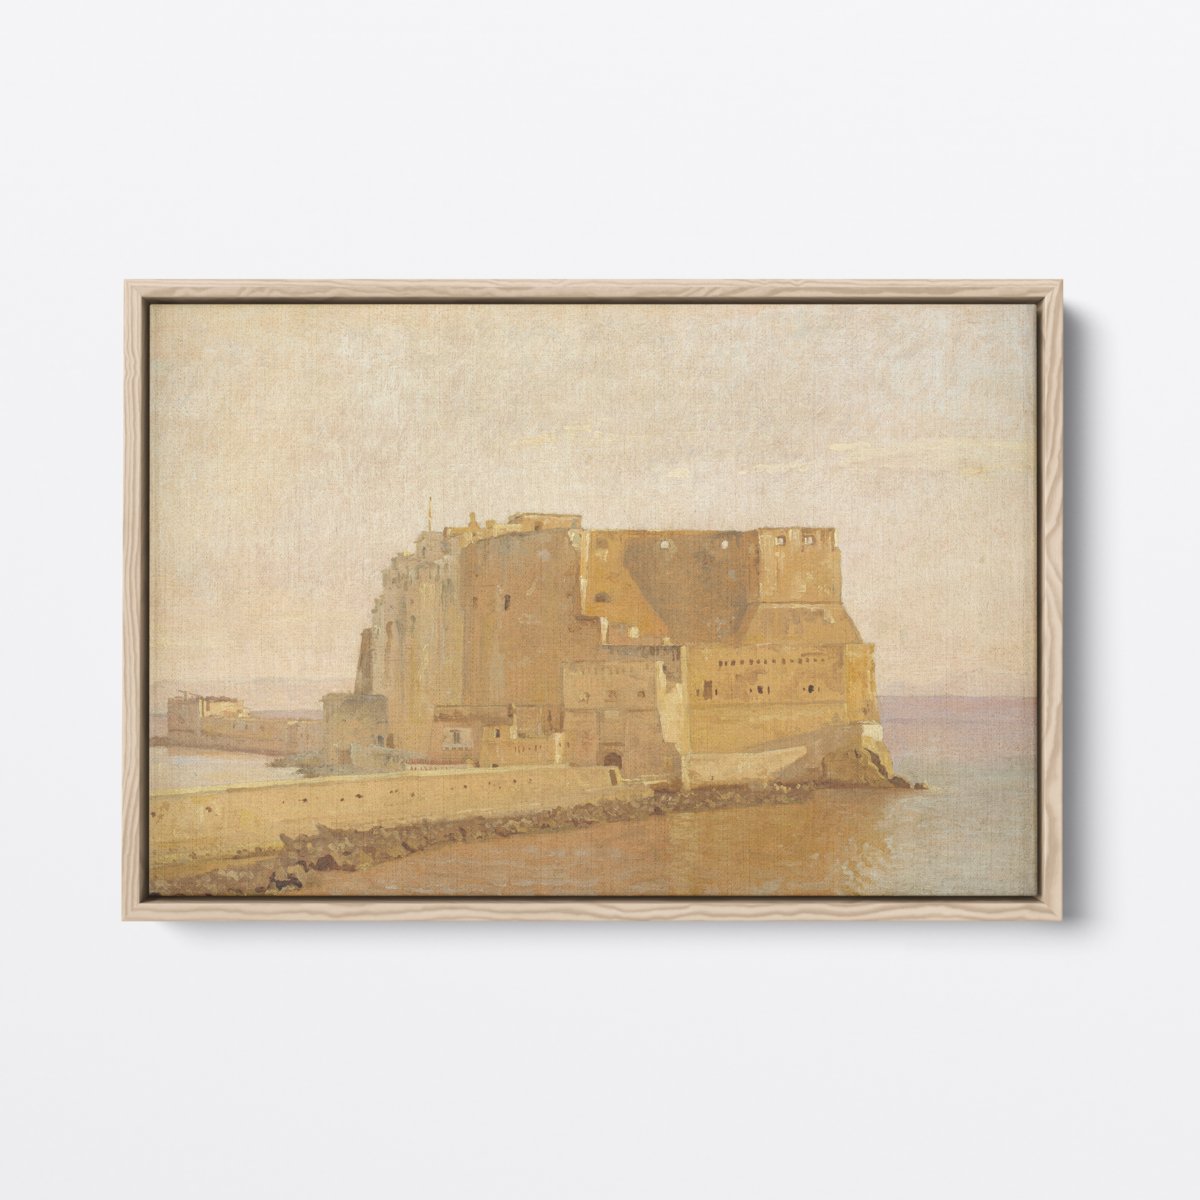 Castle Ovo, Naples | Christen Købke | Ave Legato | Canvas Art Prints | Vintage Artwork